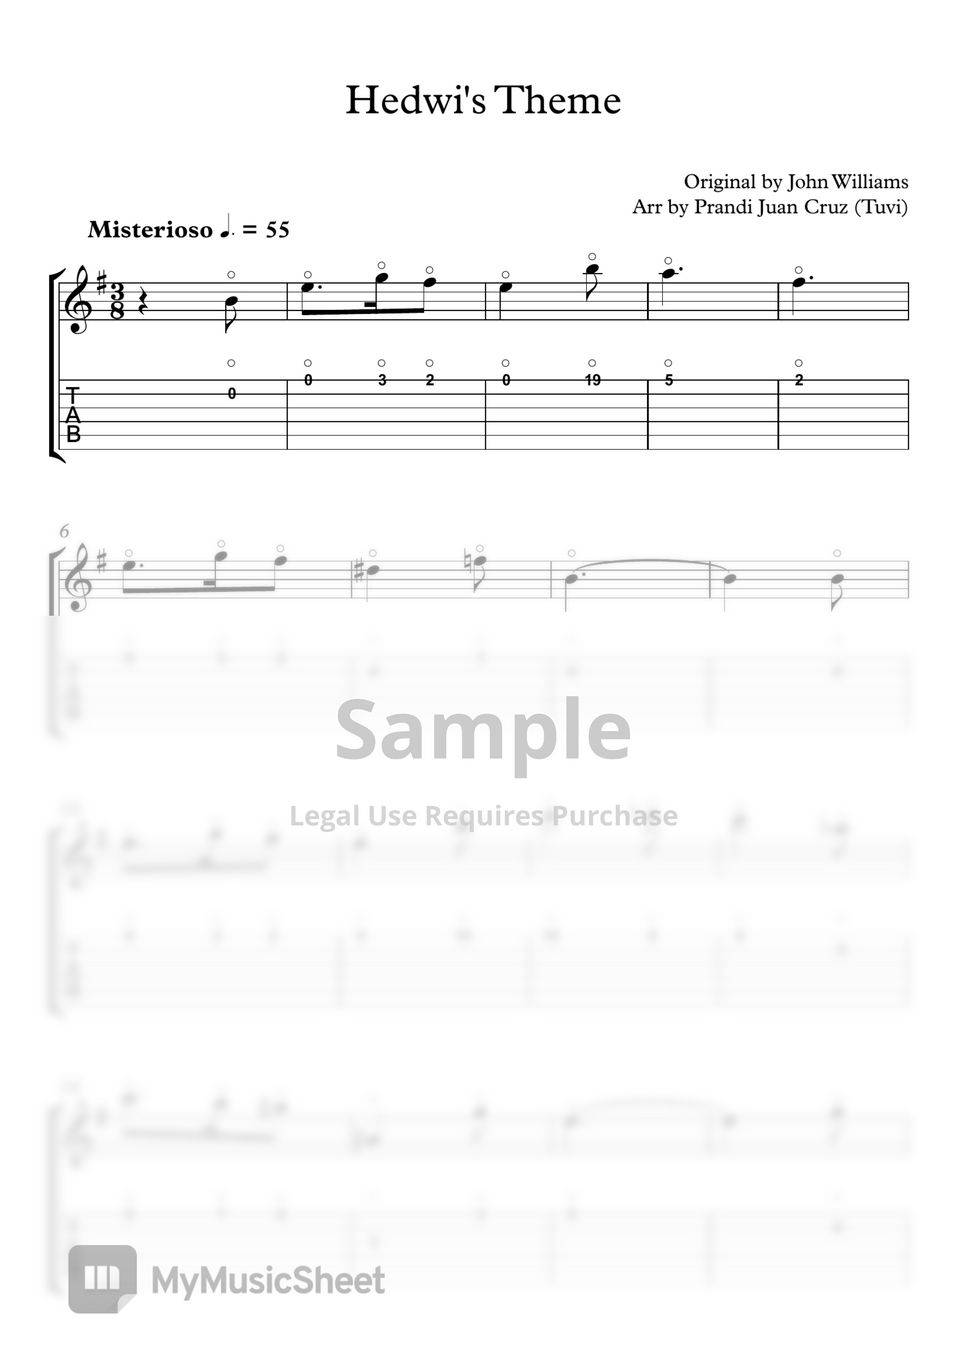 John Williams - Hedwi's theme (Classical guitar/Guitar cover) by Tuvi_guitar